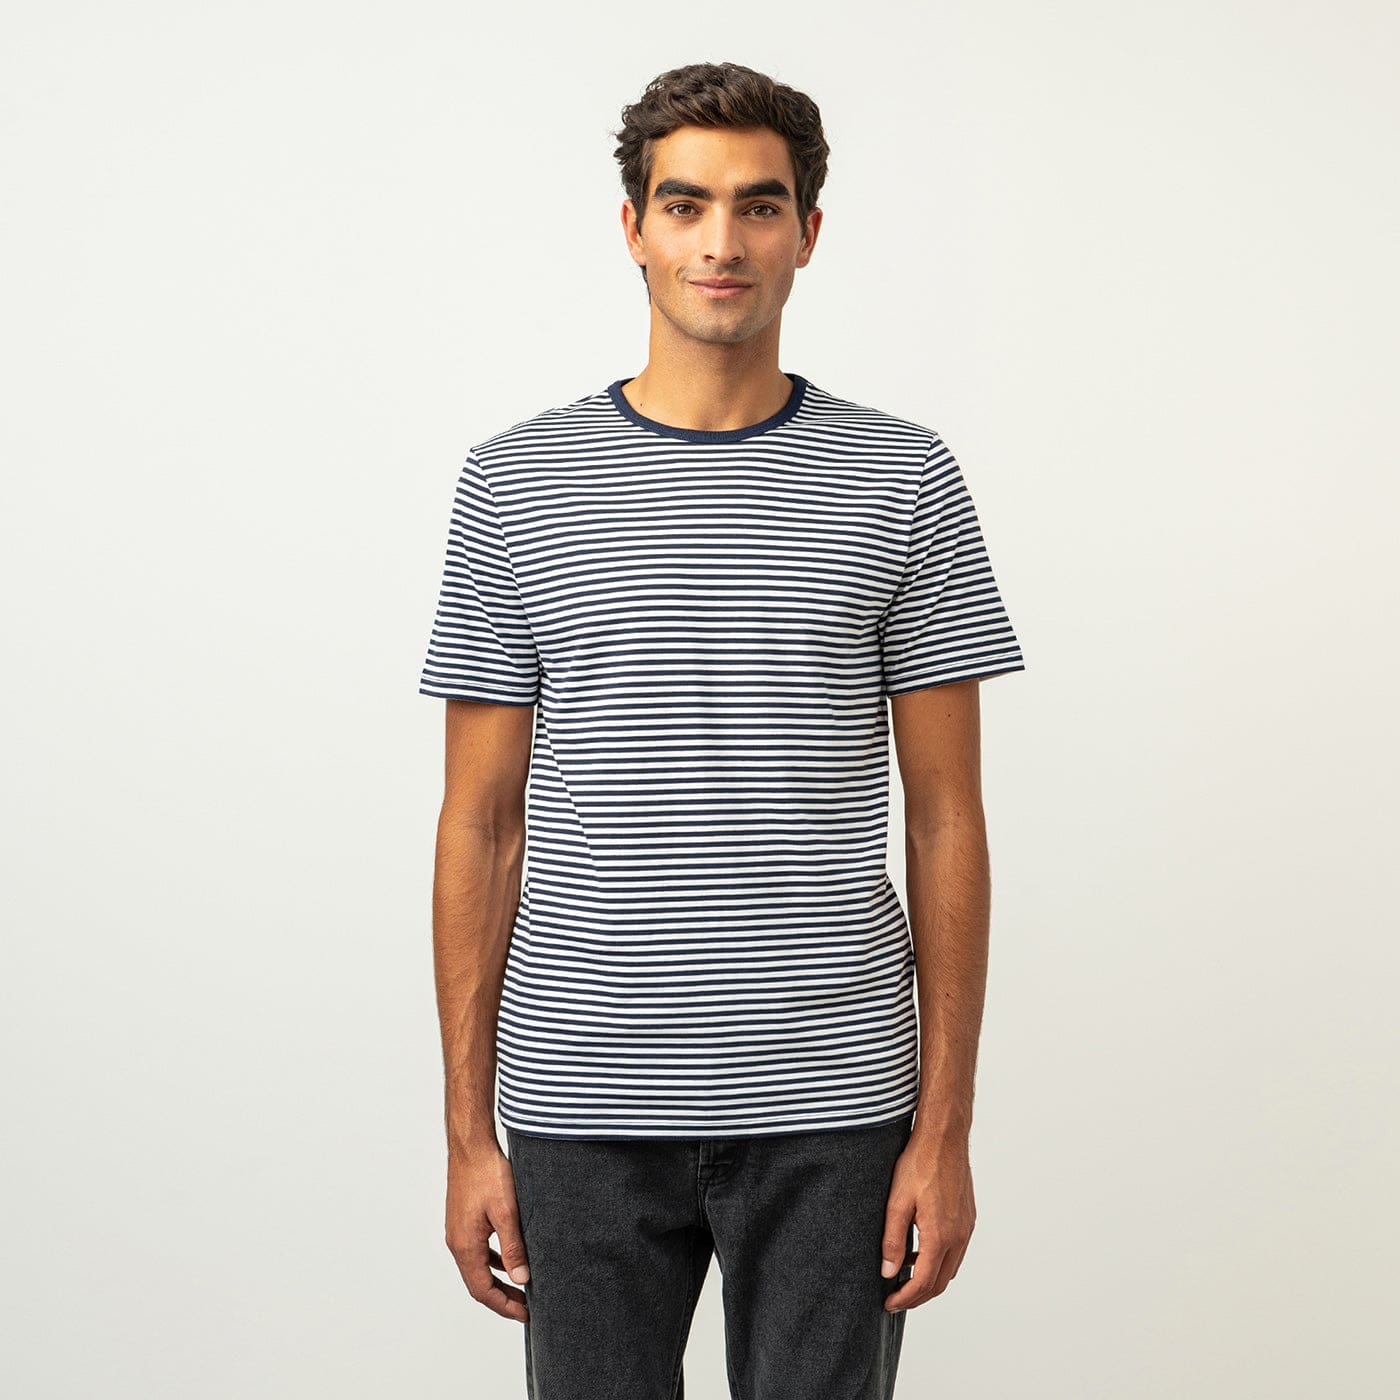 Men's Striped Classic T-Shirt Navy & White - Organic Cotton | ISTO.